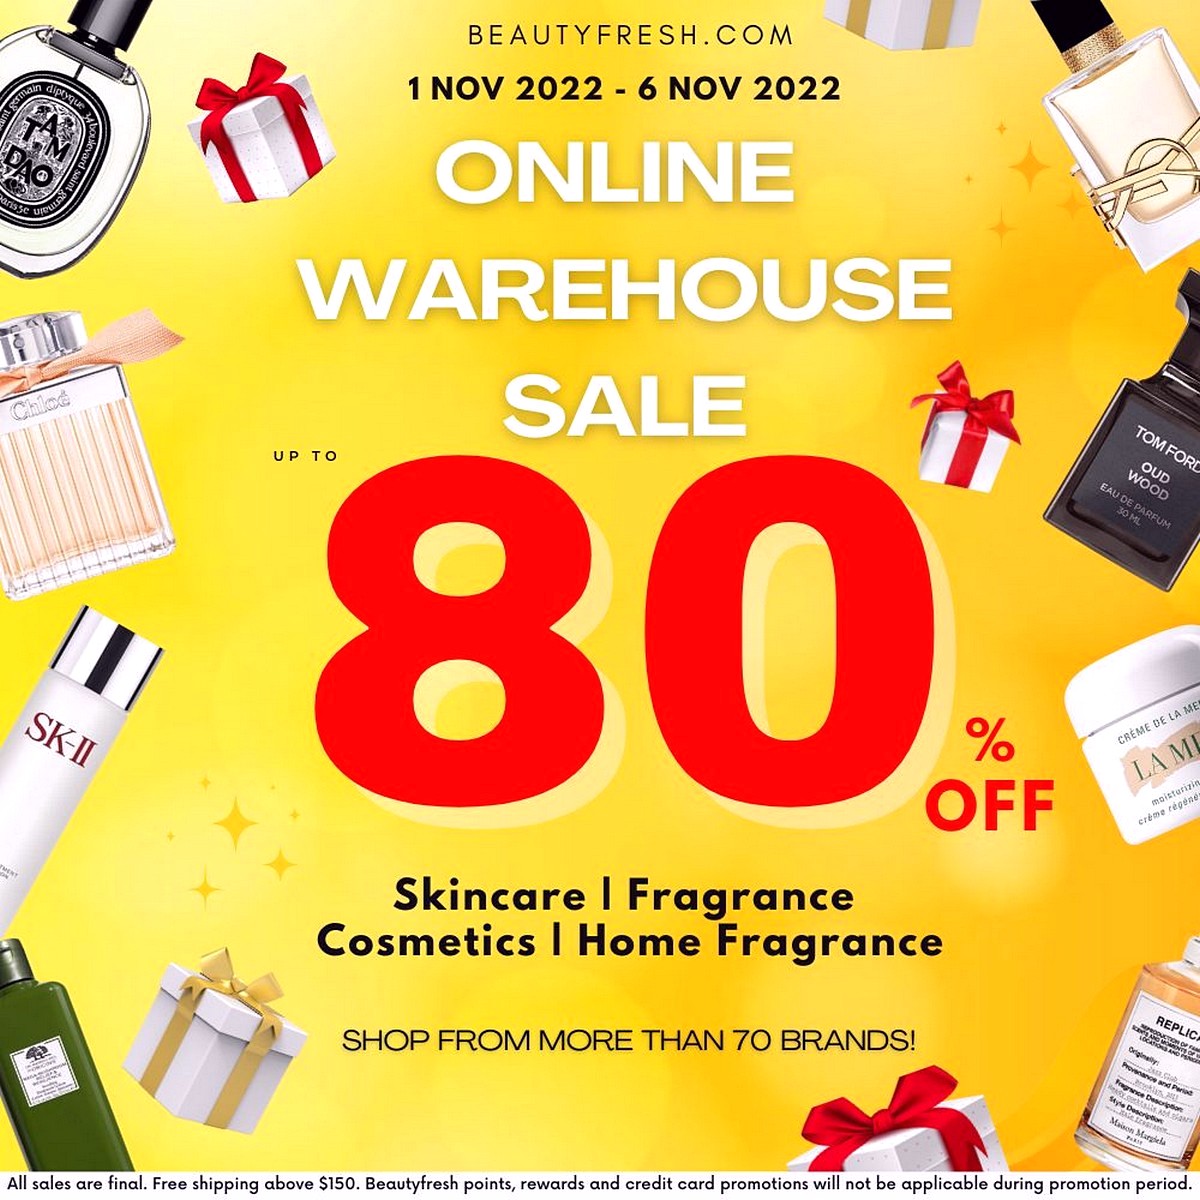 OWHS-2022-MOBILE-WEB-BANNER 1-6 Nov 2022: BeautyFresh Warehouse Sale Islandwide Online Clearance in Singapore